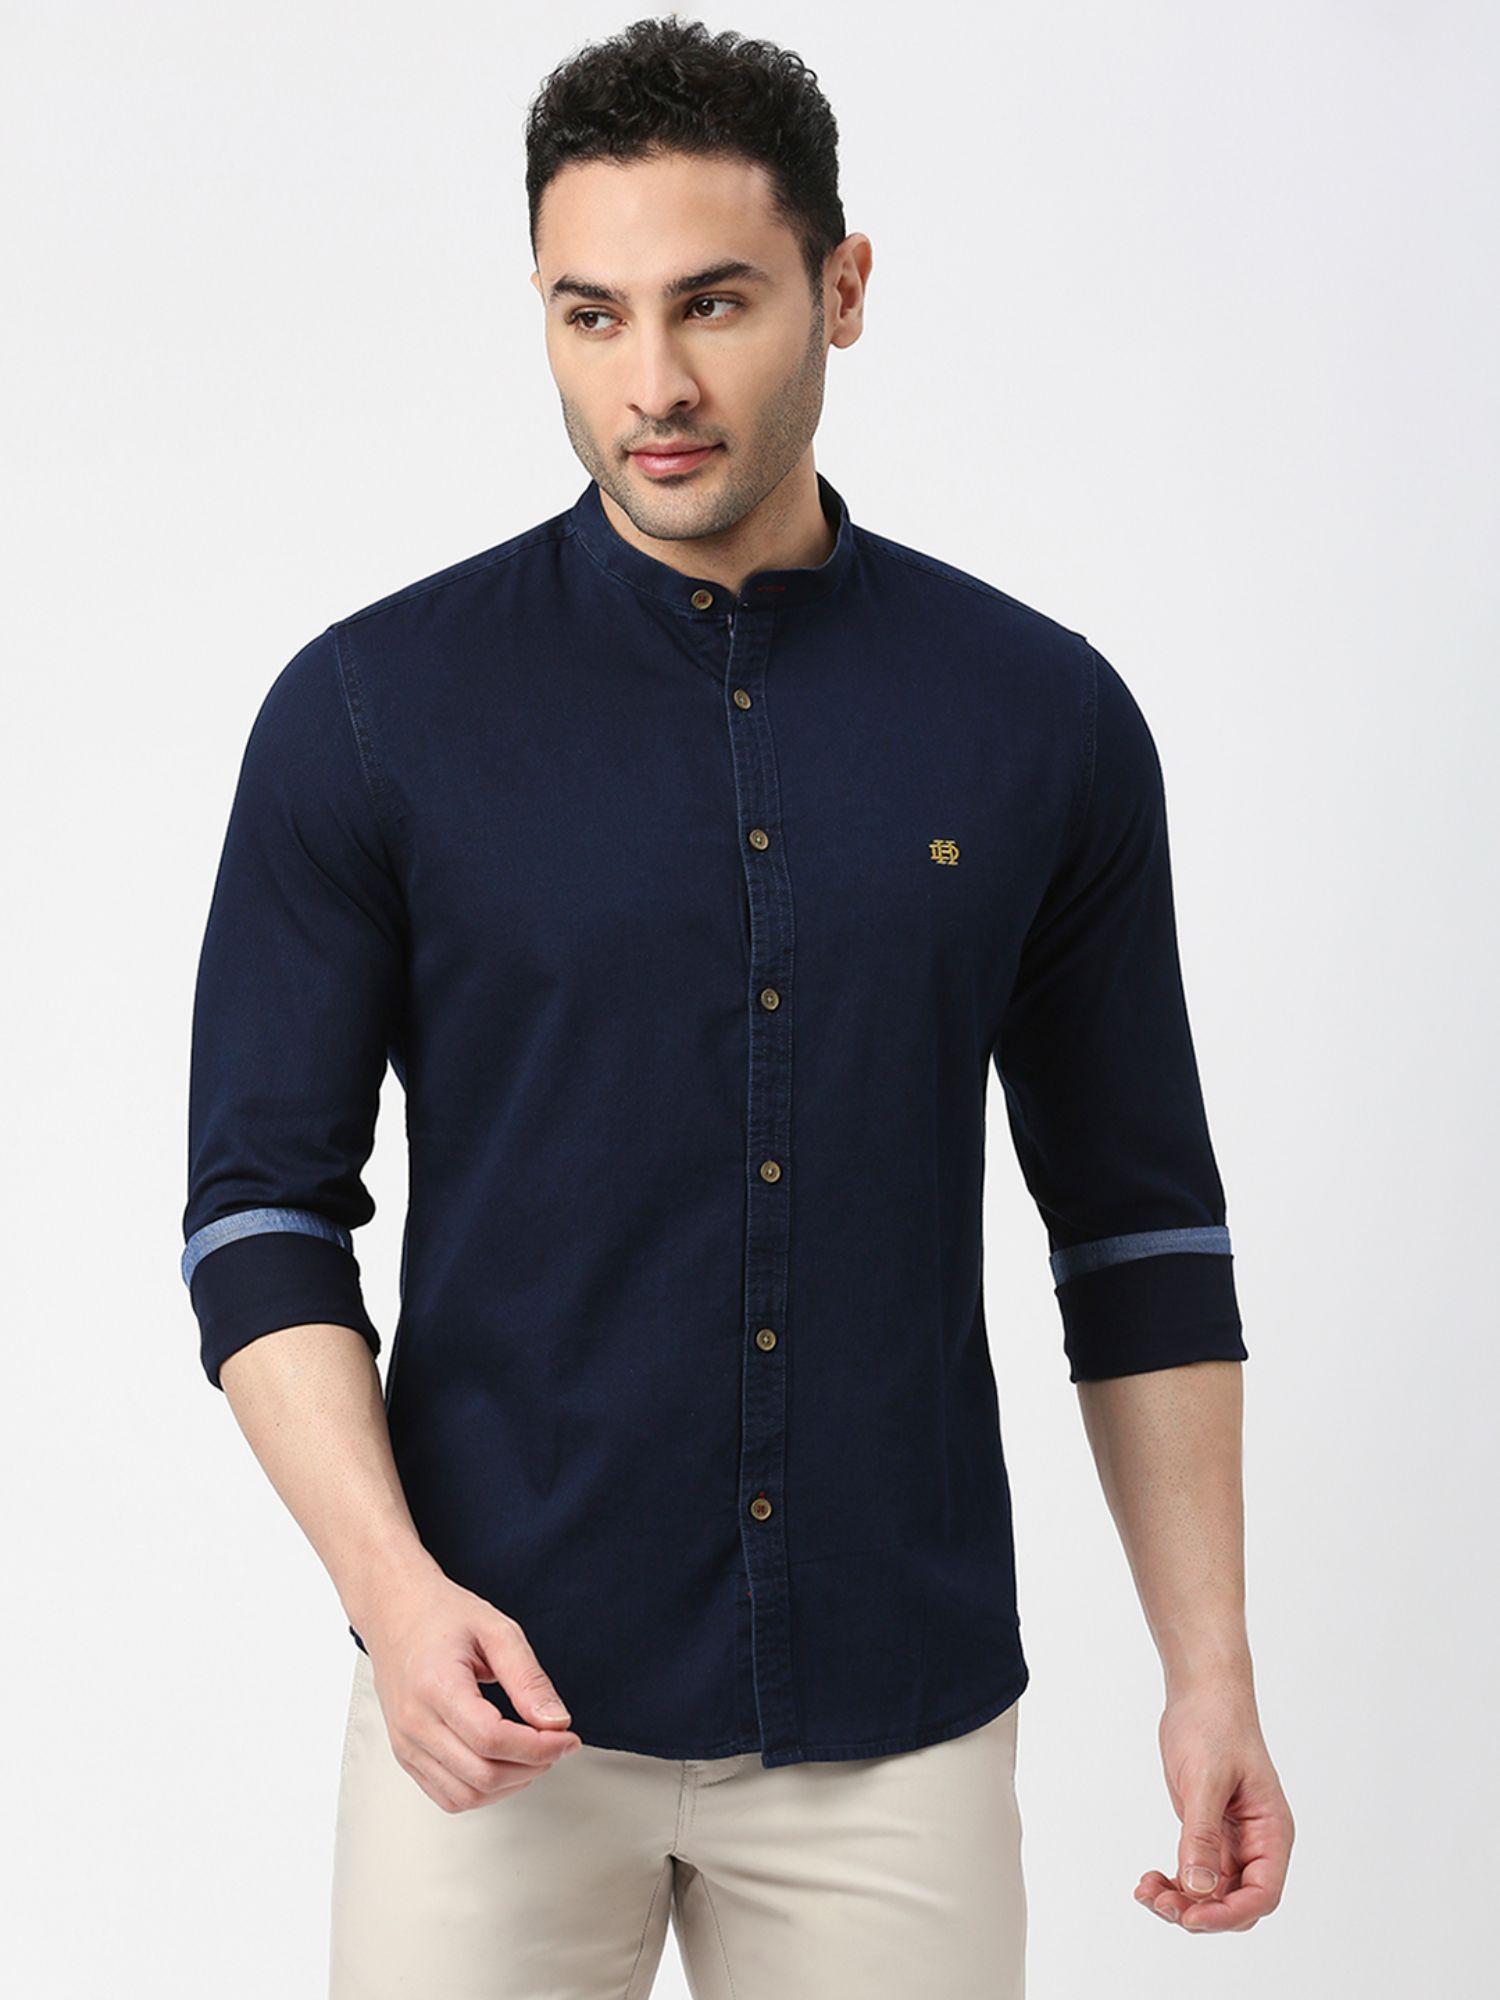 full sleeves indigo blue premium cotton shirt with stand collar